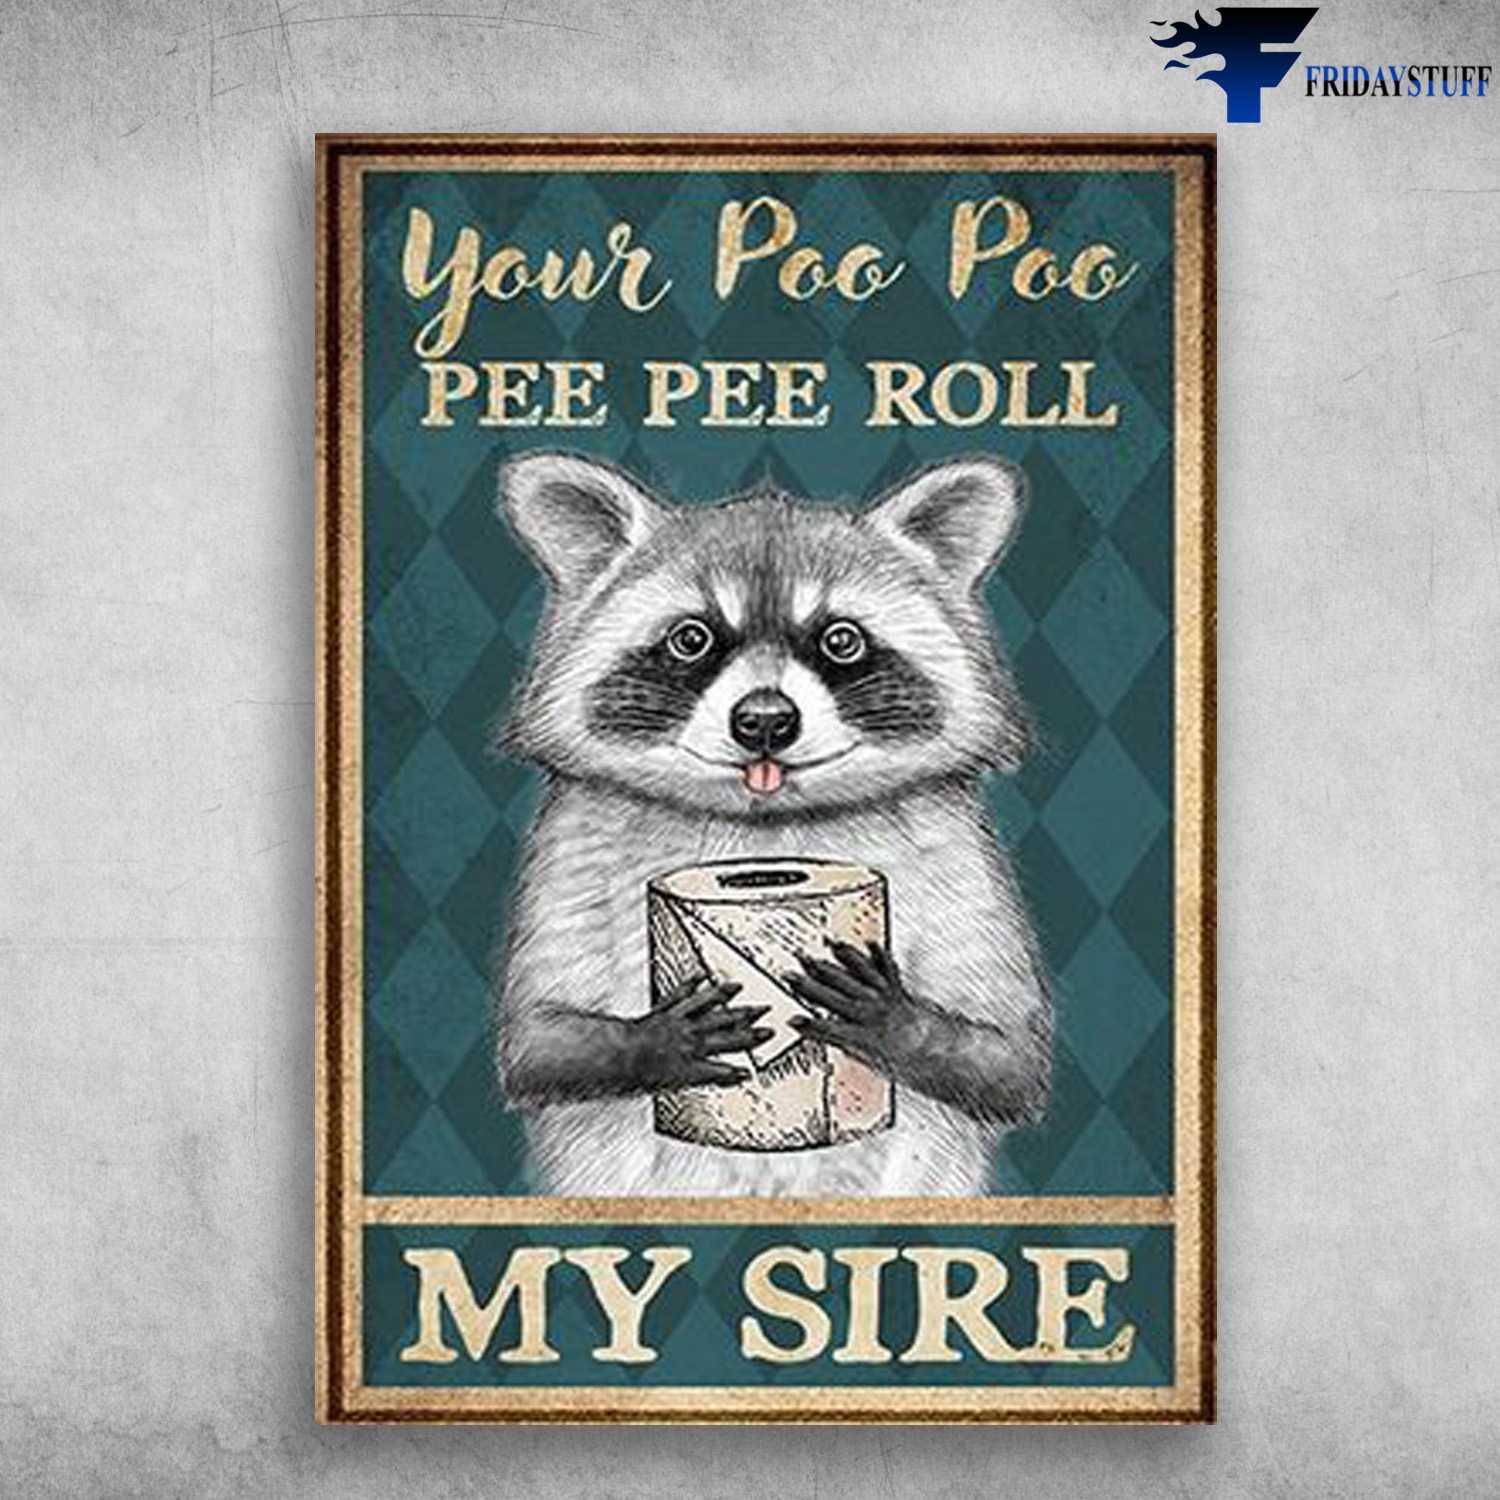 Raccoon Poster, Restroom Poster, Your Poo Poo, Pee Pee Rool, My Sire